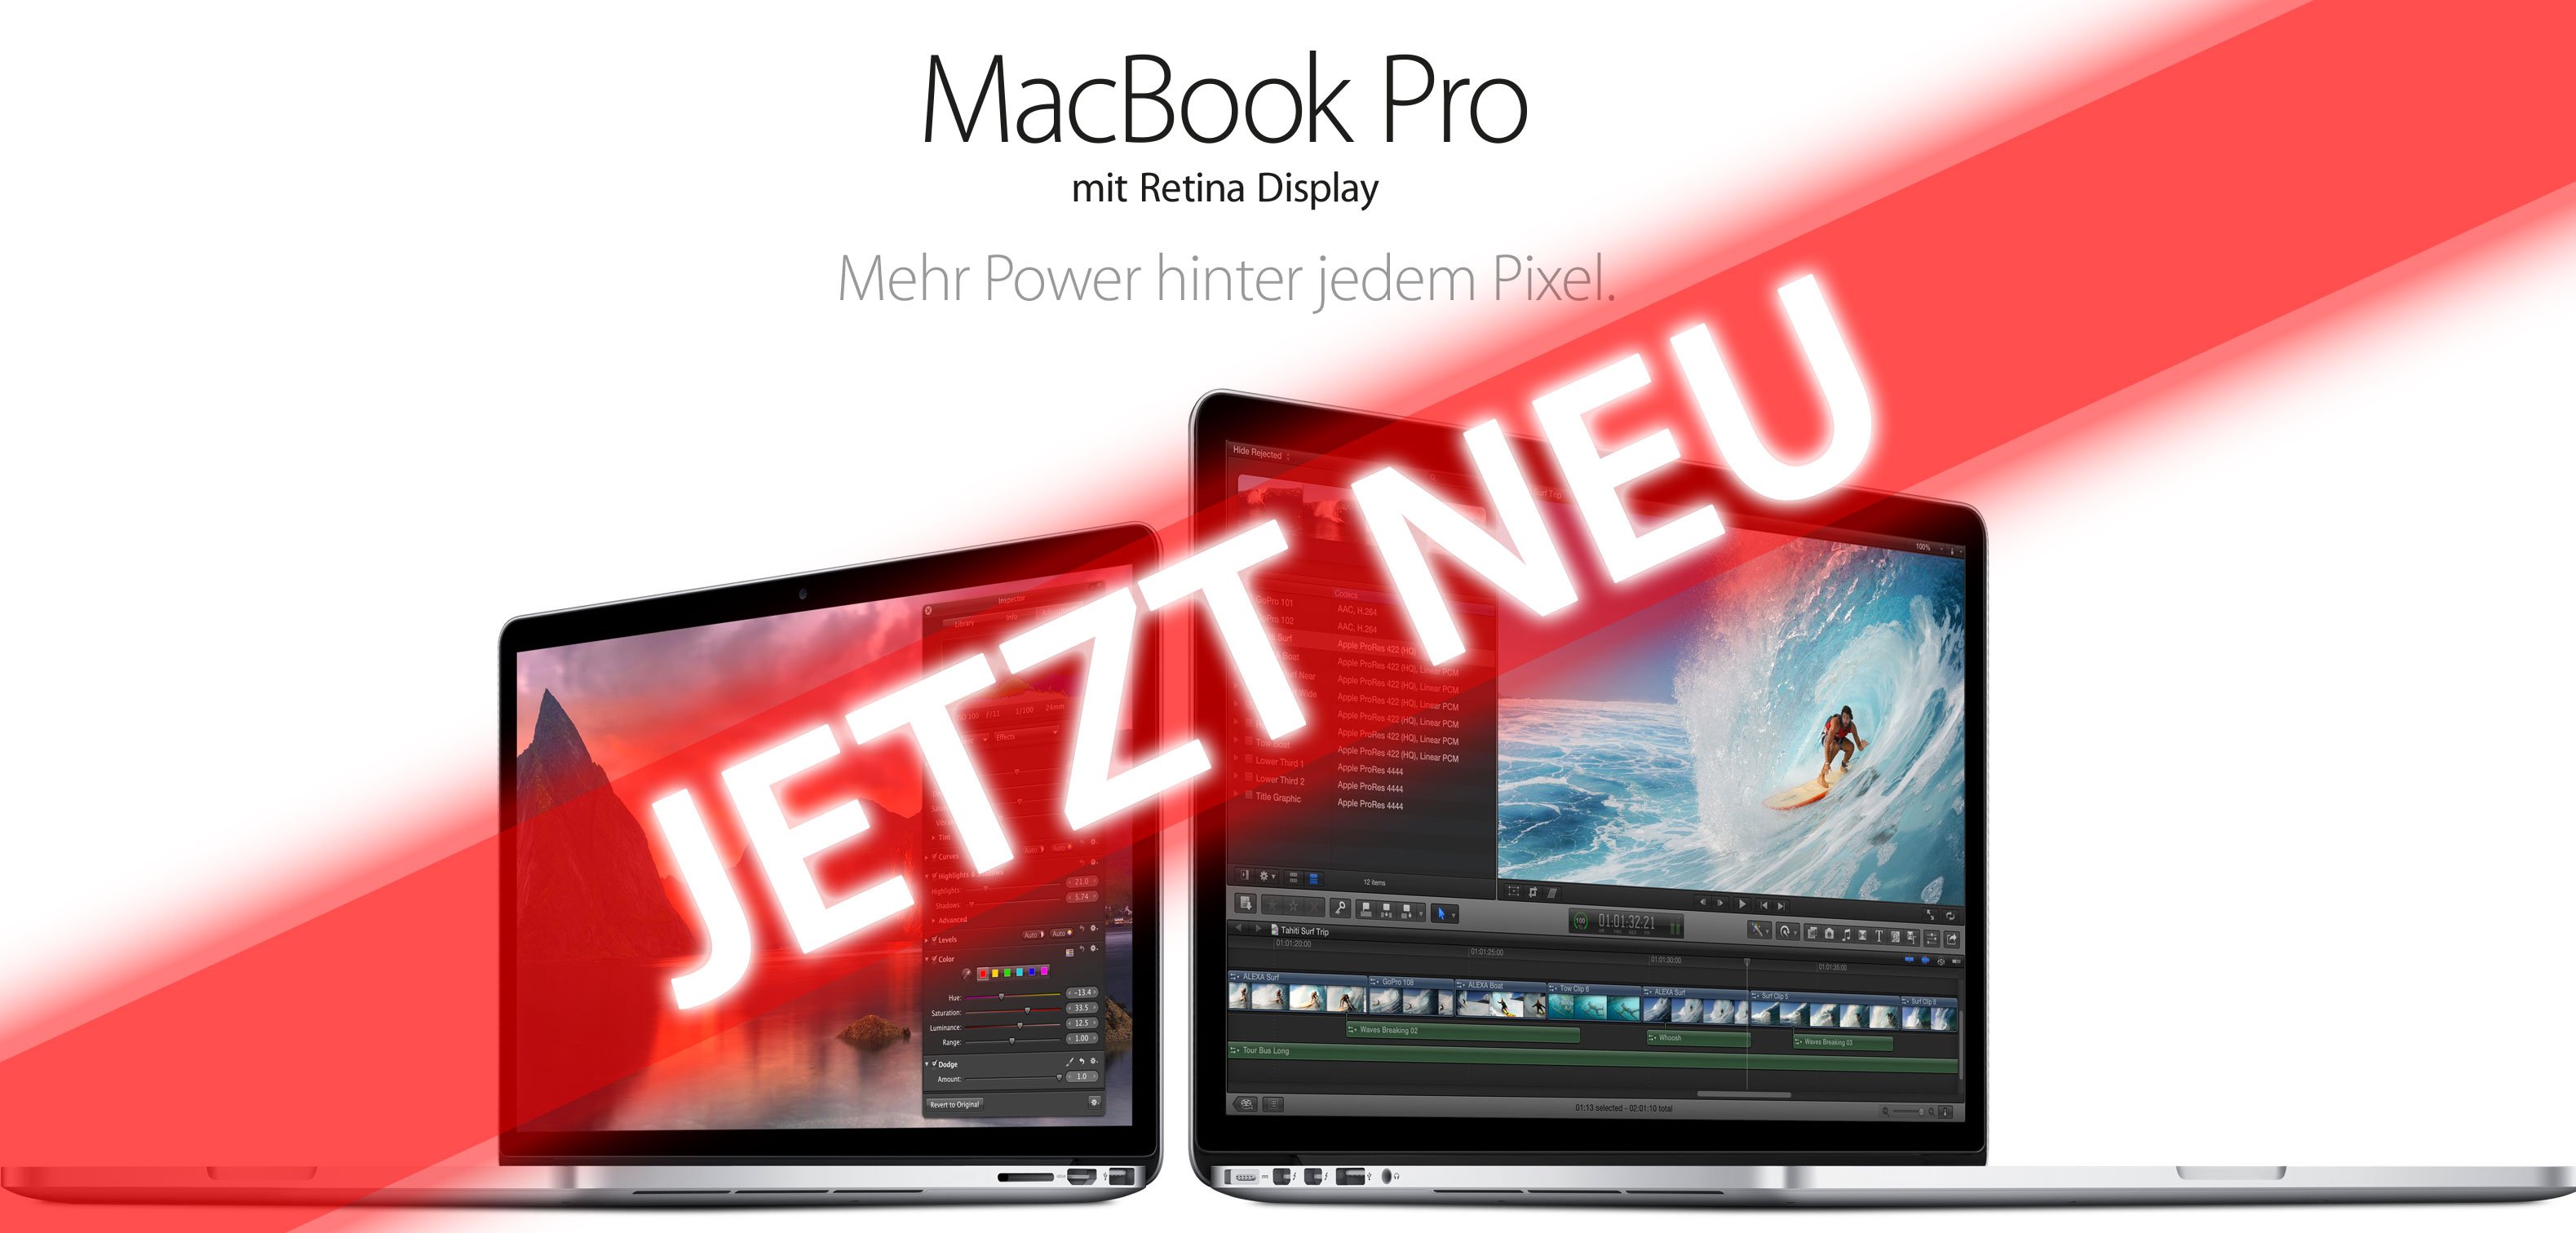 MacBook Pro 2014 mit Retina Display jetzt im Apple Online Store 5